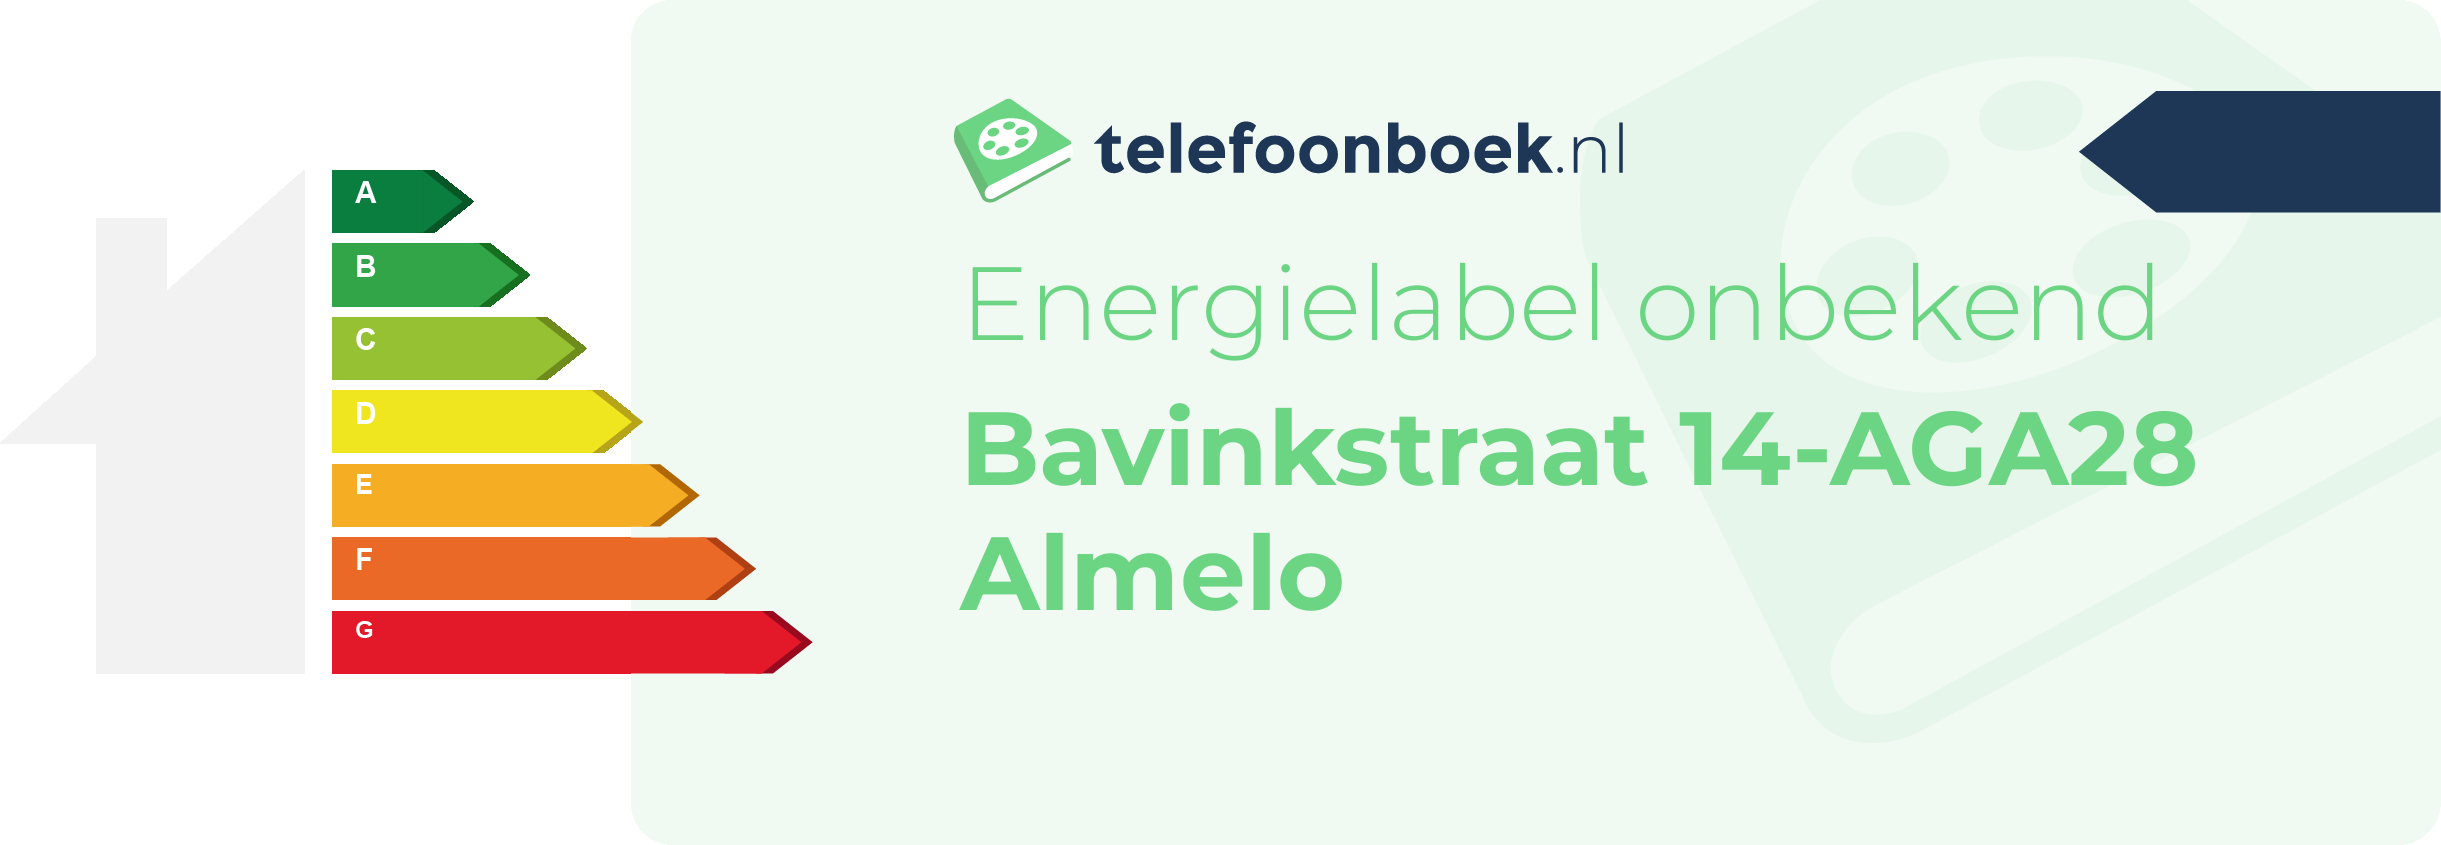 Energielabel Bavinkstraat 14-AGA28 Almelo